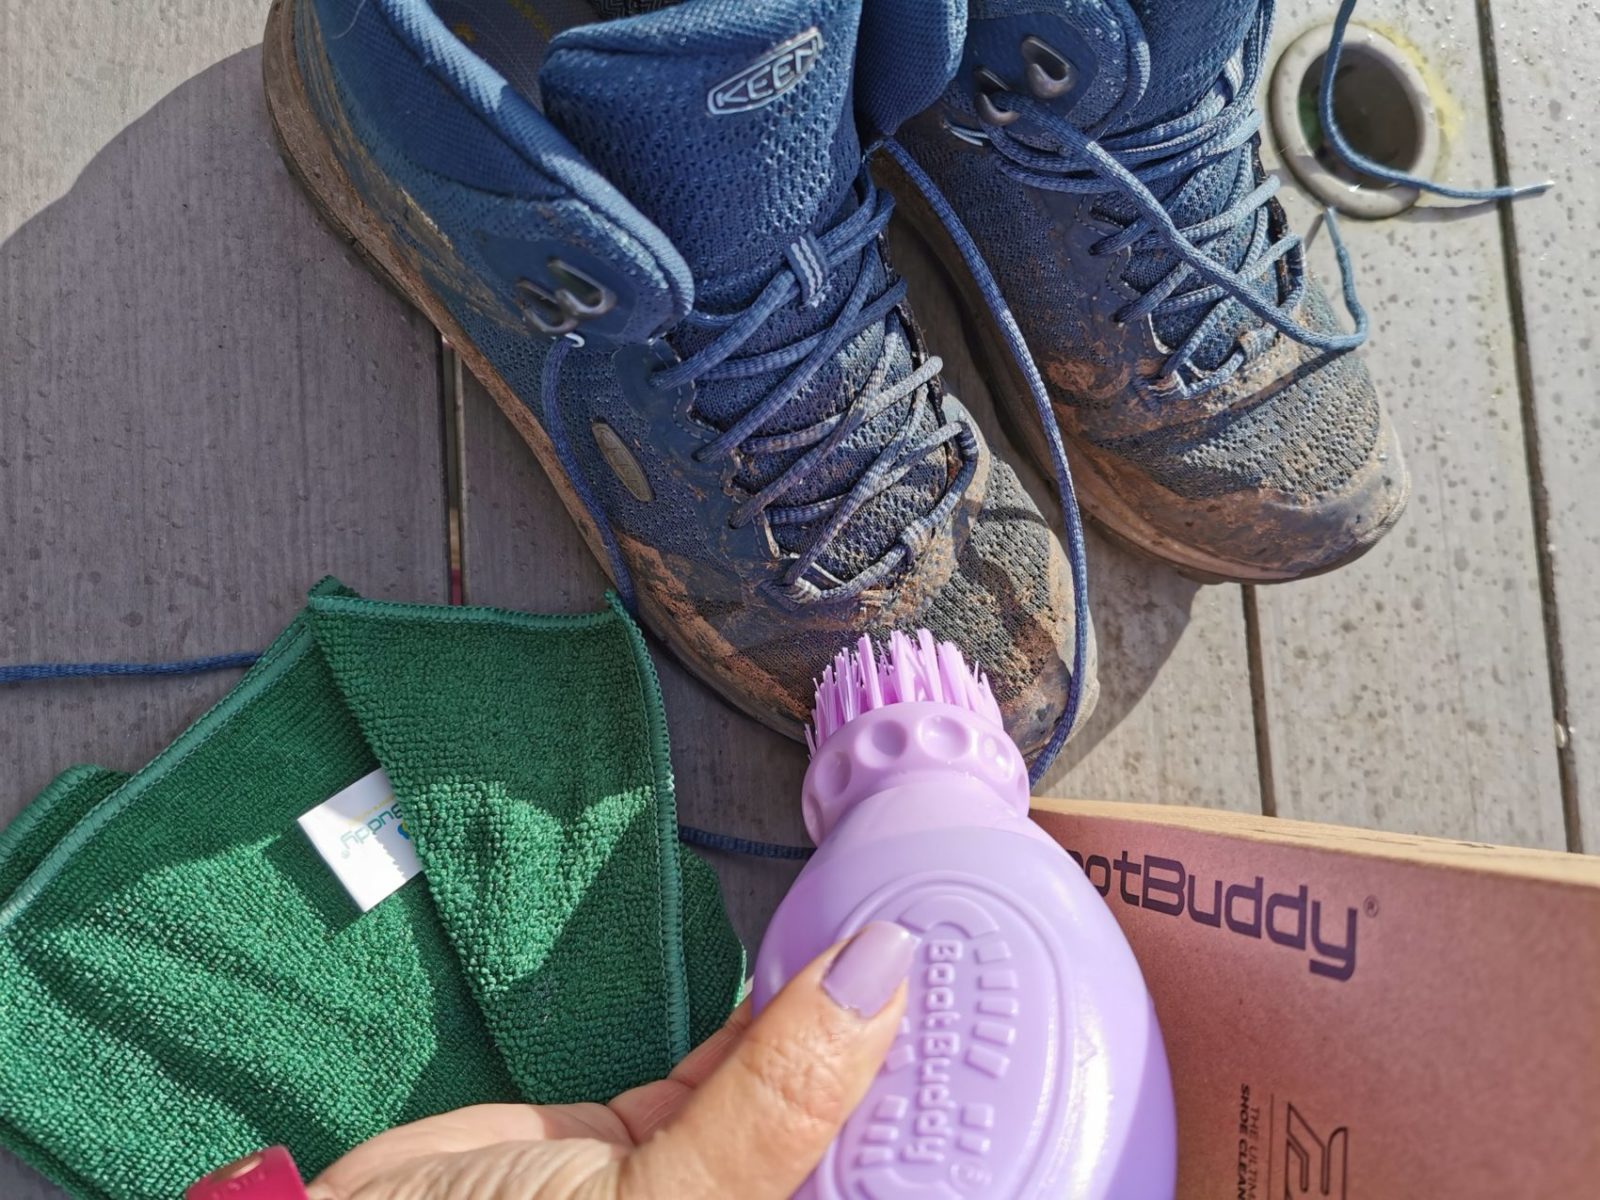 Boot Buddy footwear cleaner